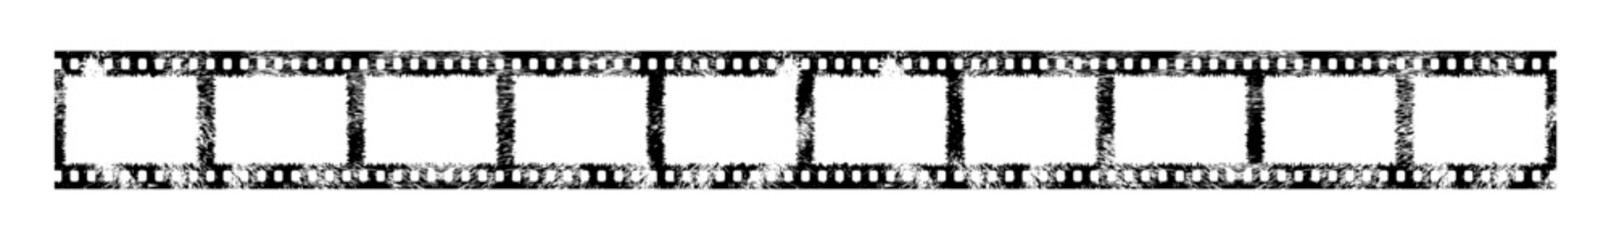 Vintage style 35mm film strip retro vintage vector design with 10 frames on white background. Retro film reel symbol illustration to use in photography, television, cinema, photo frame.
